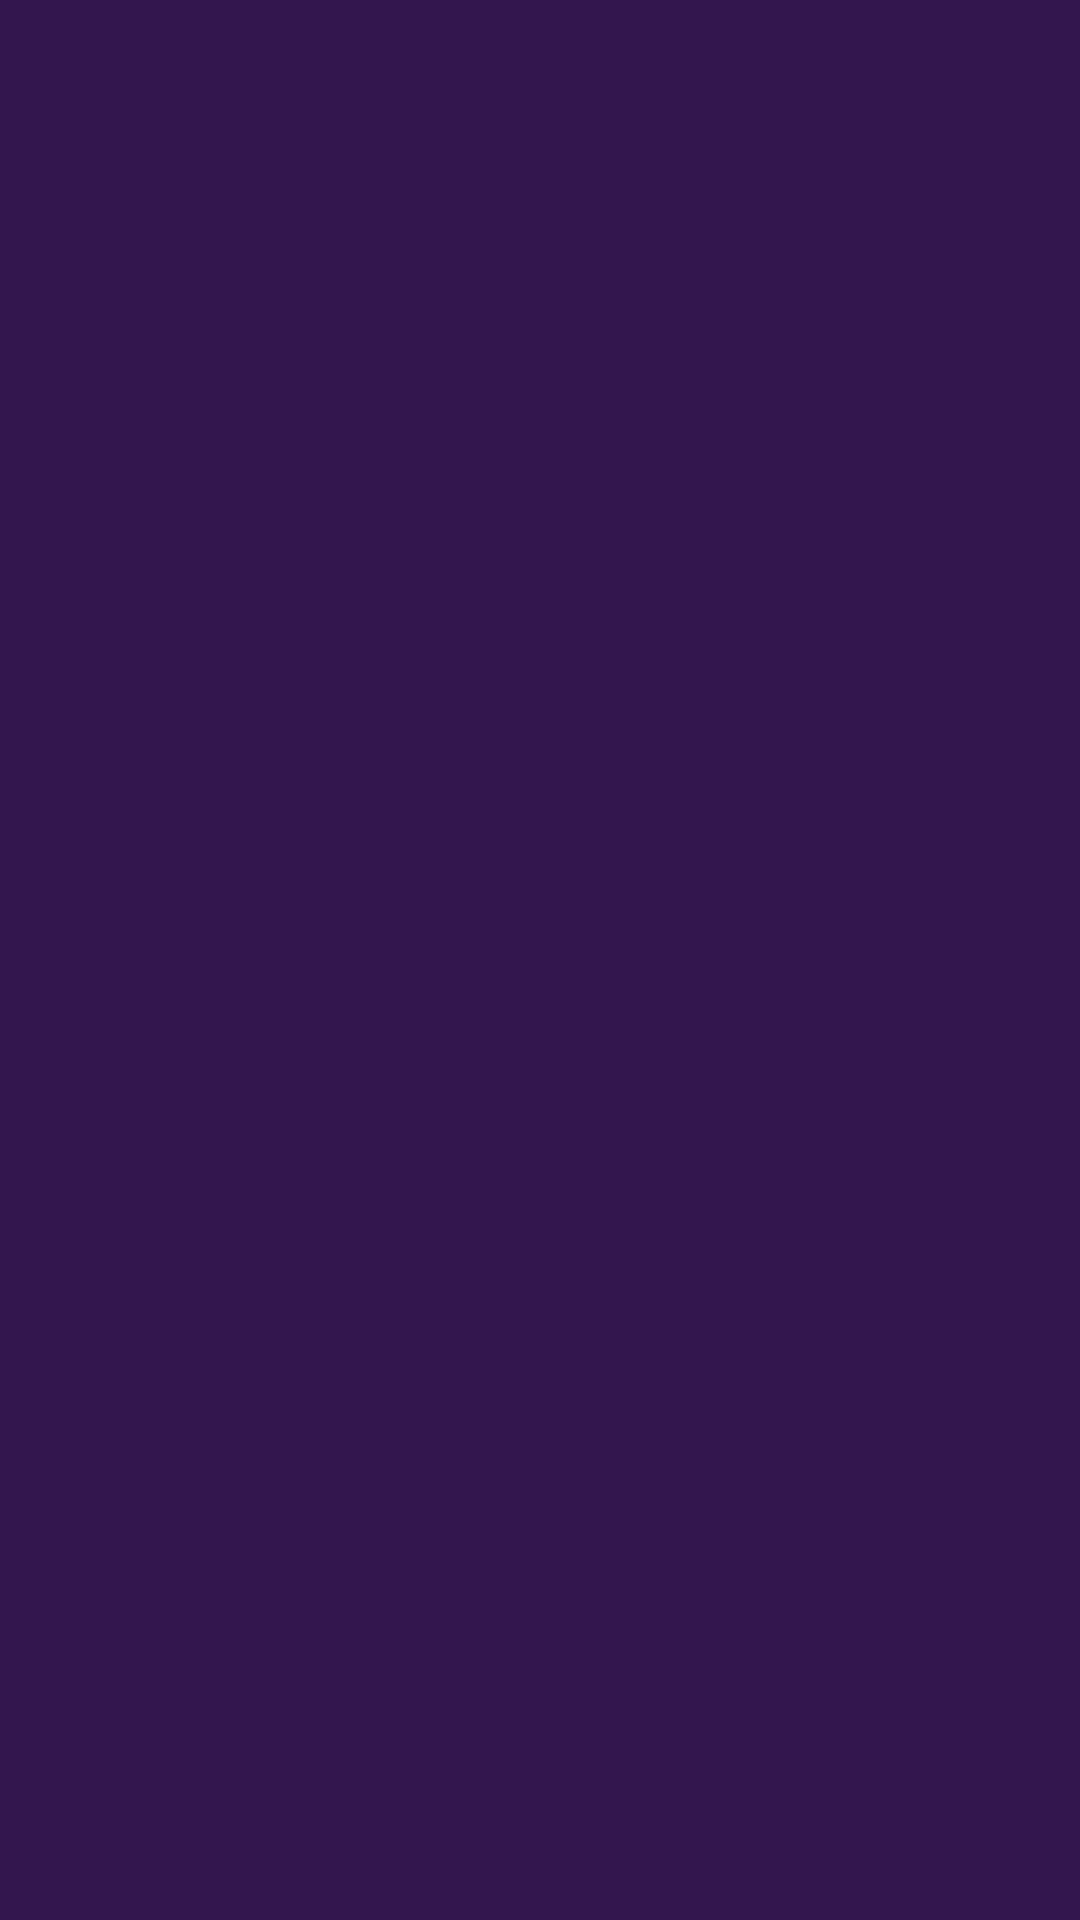 Endless Purple Expanse